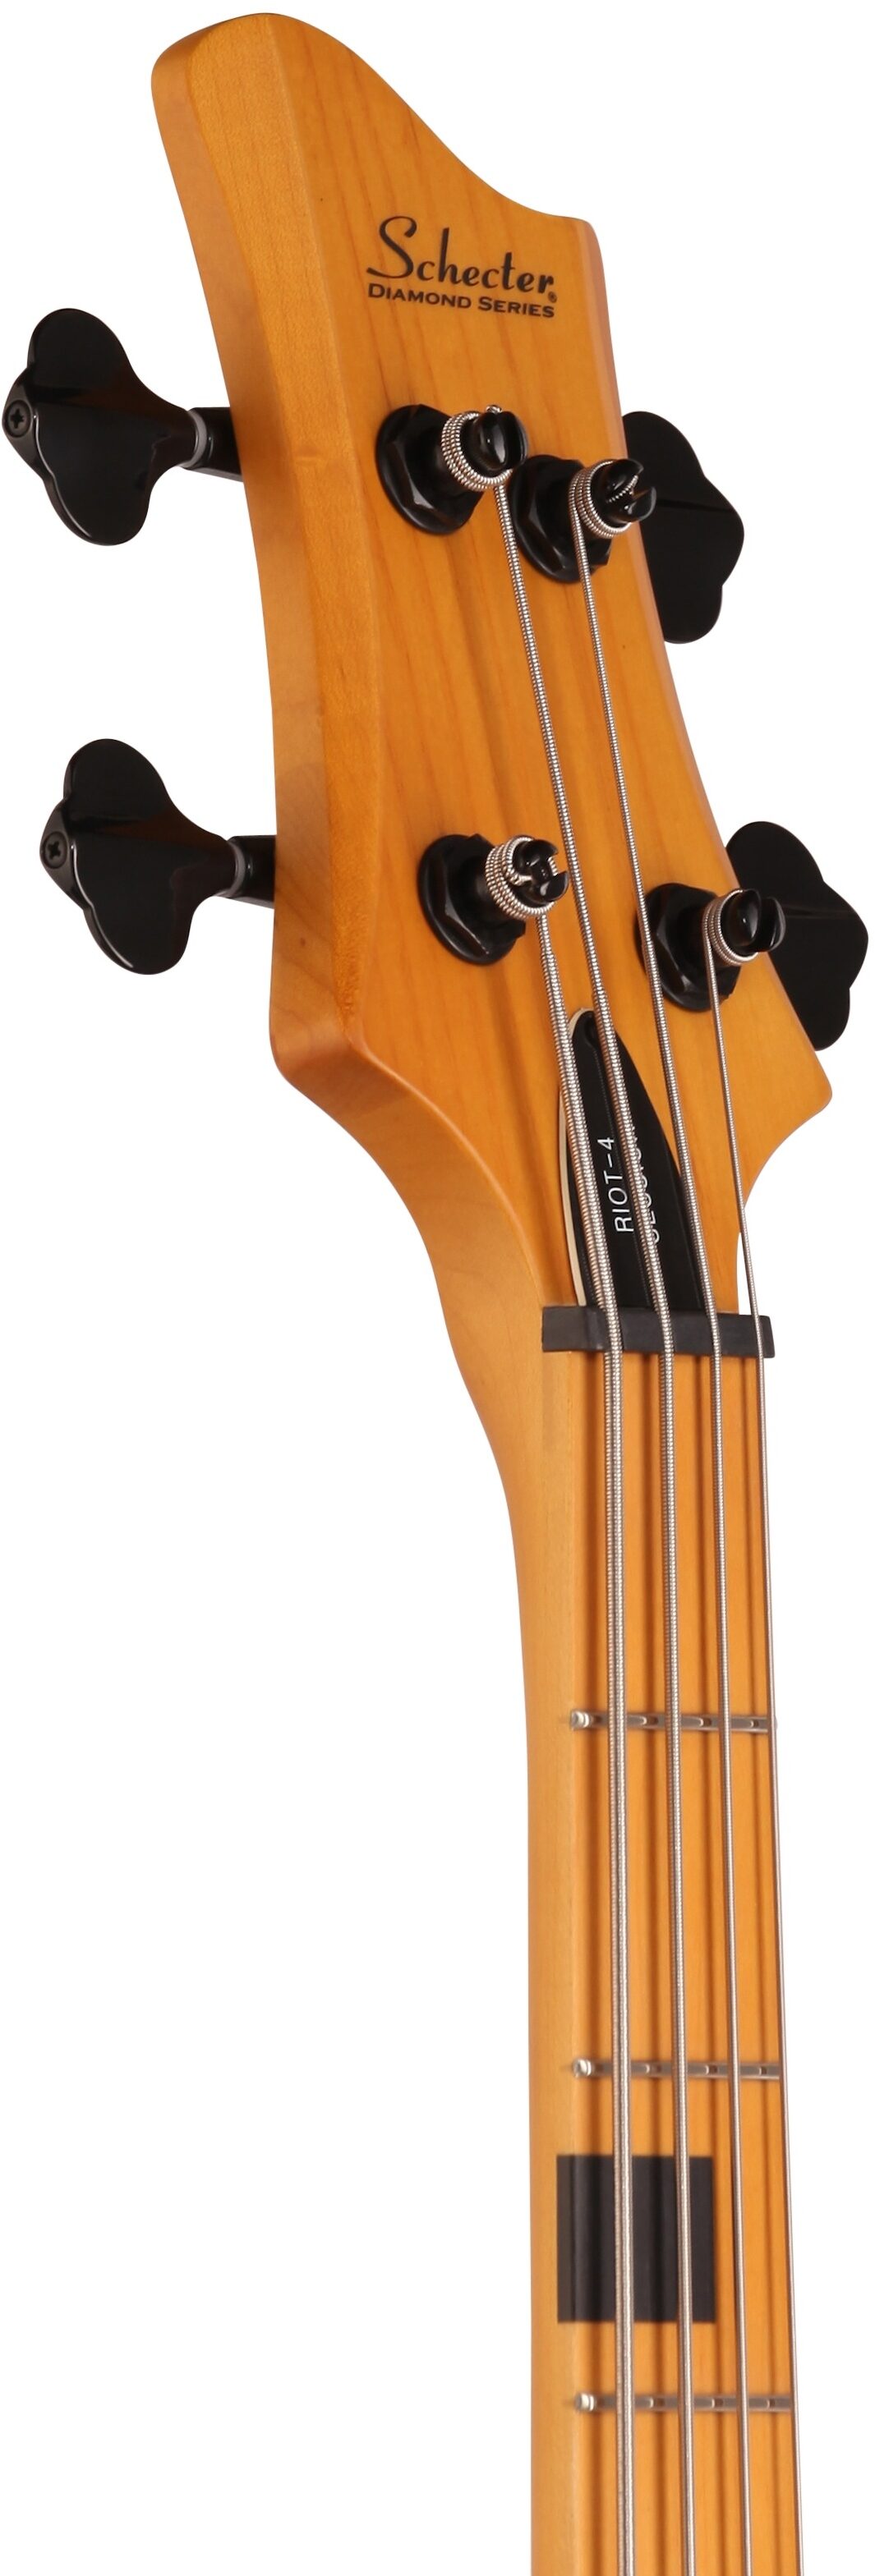 Schecter 2852 Session RIOT-4 ANS Bass Guitars 